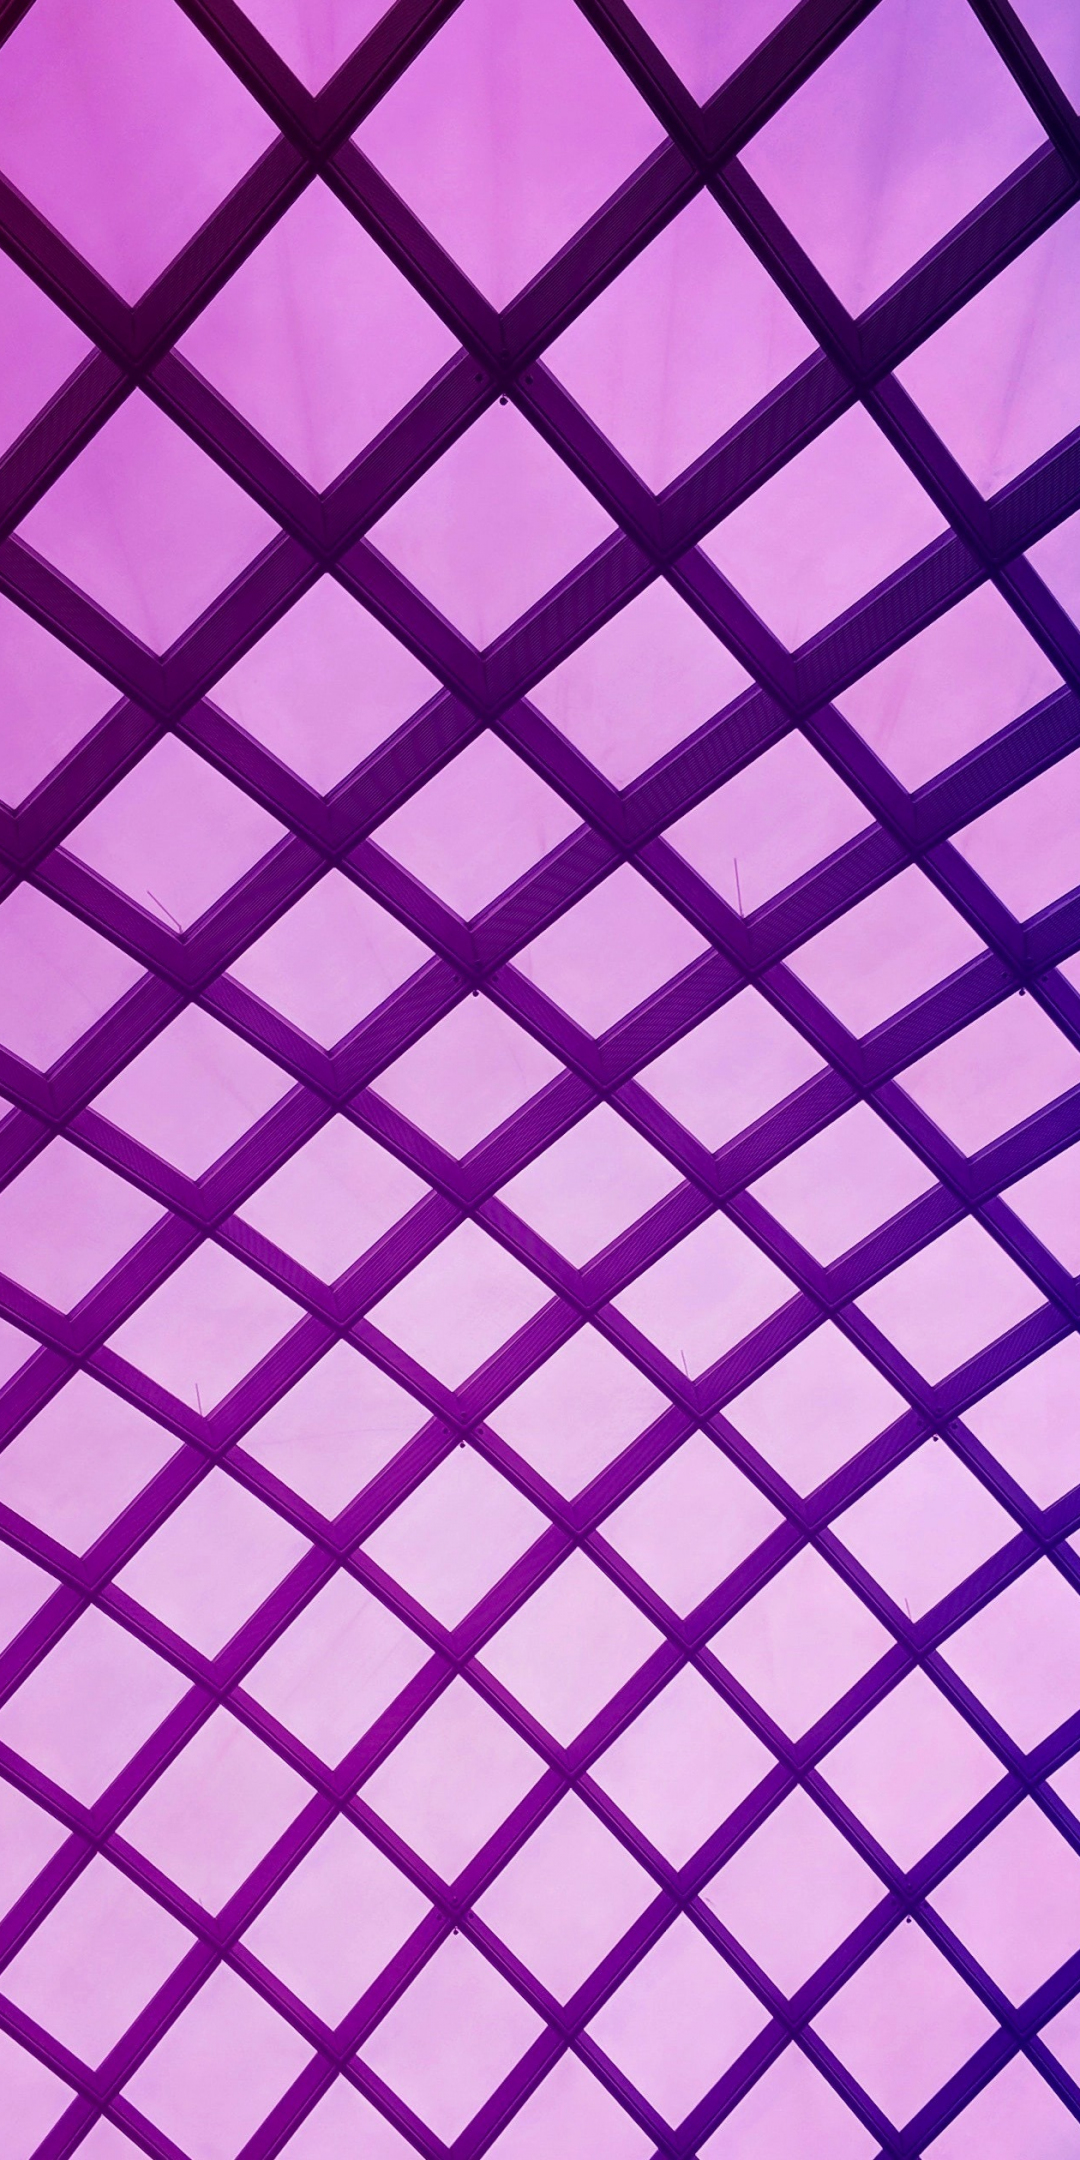 Grid, abstract, squares, pattern, digital art, 1080x2160 wallpaper